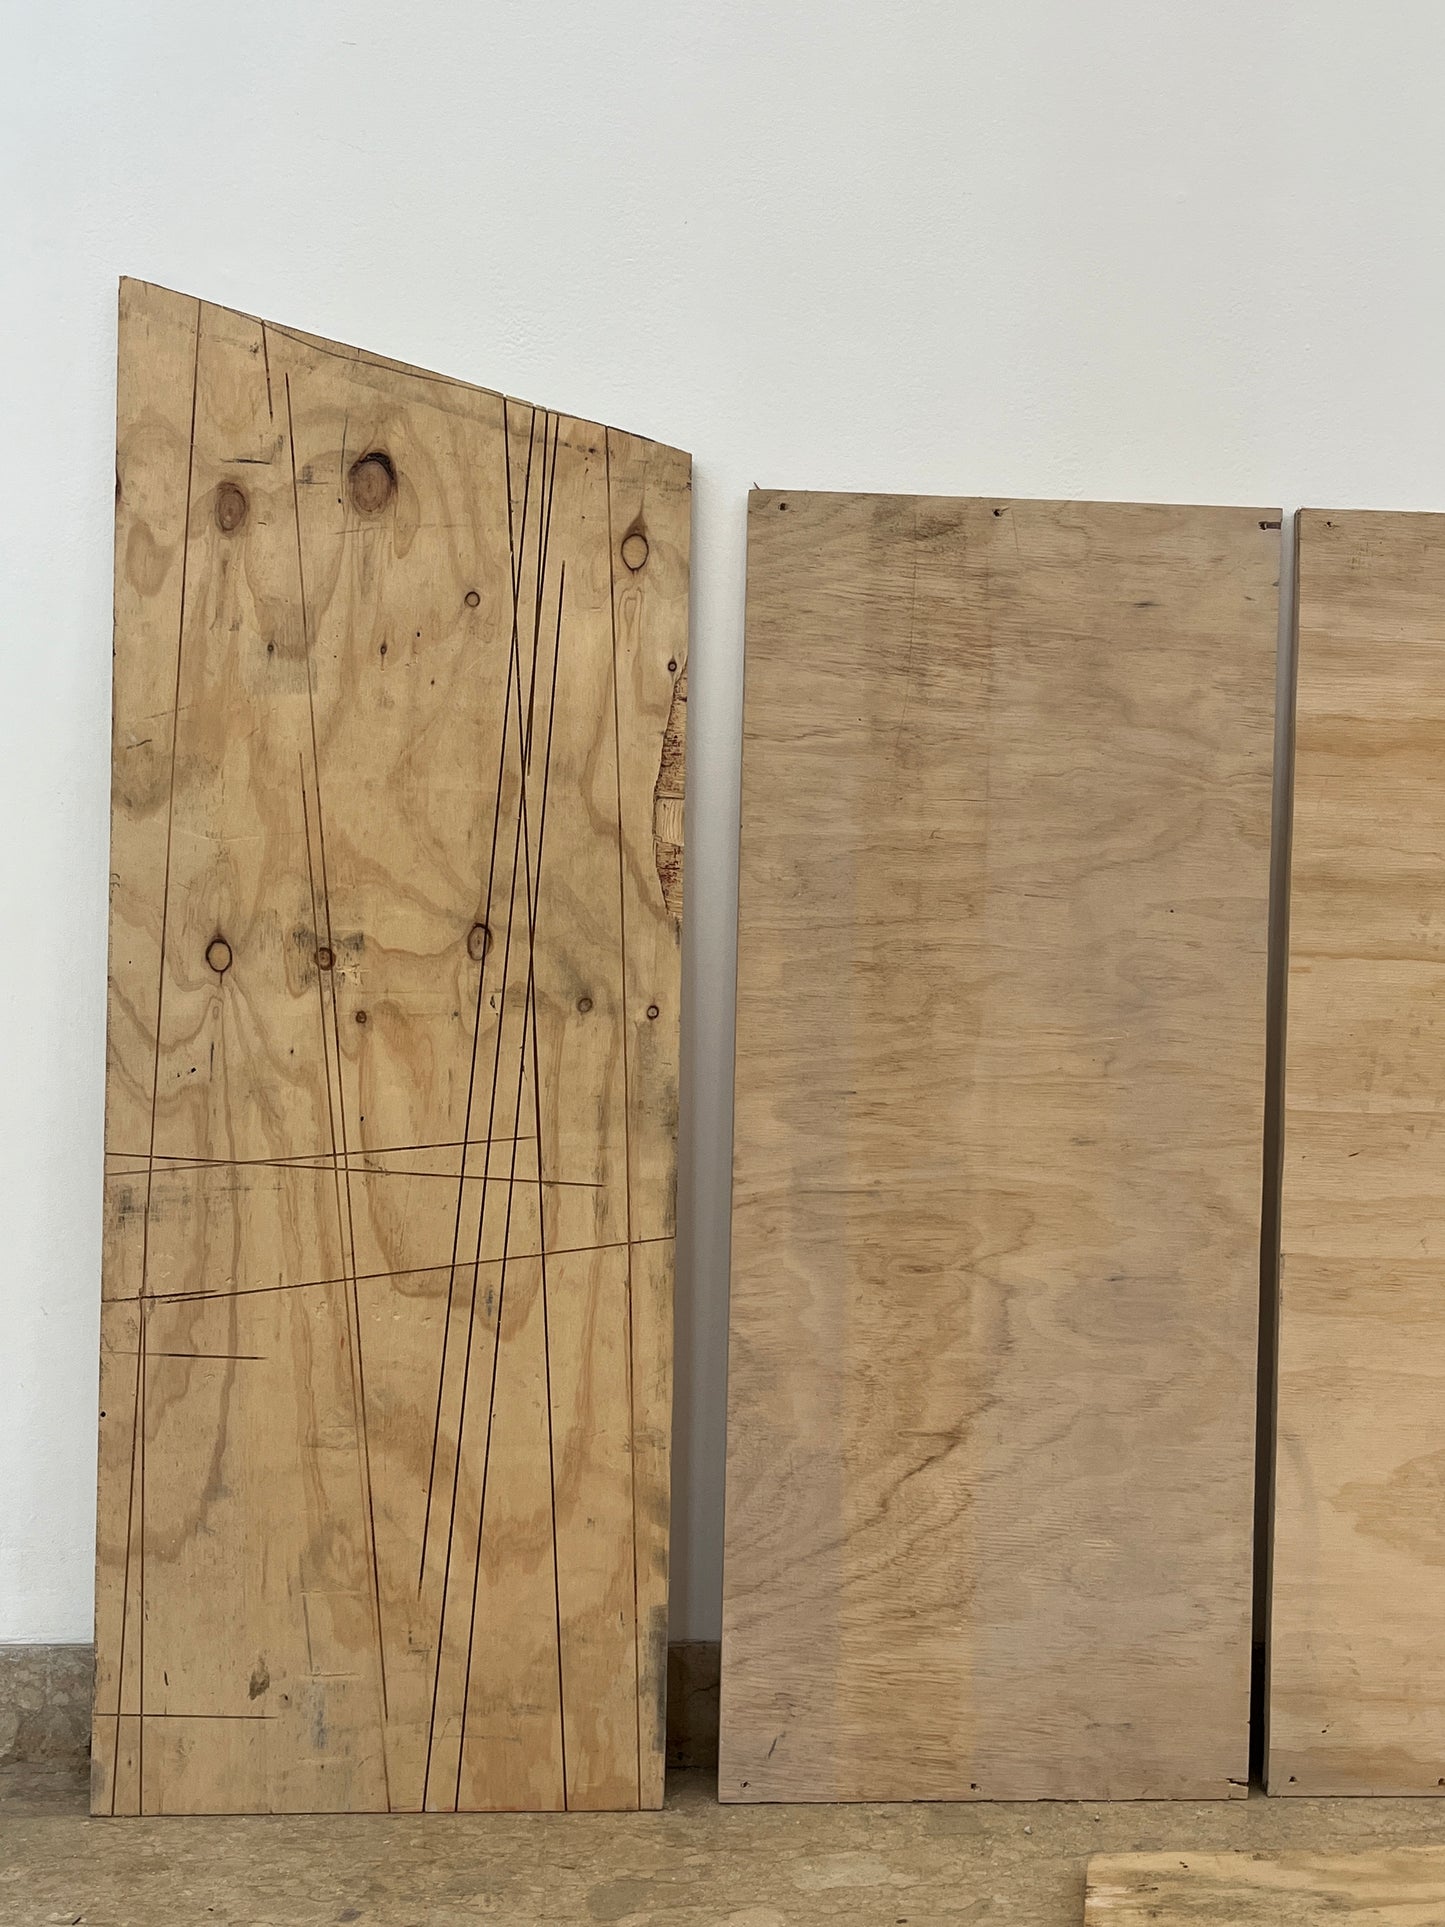 USED UP | Chilean Pavilion | Plywood Panels, 1.3.4k